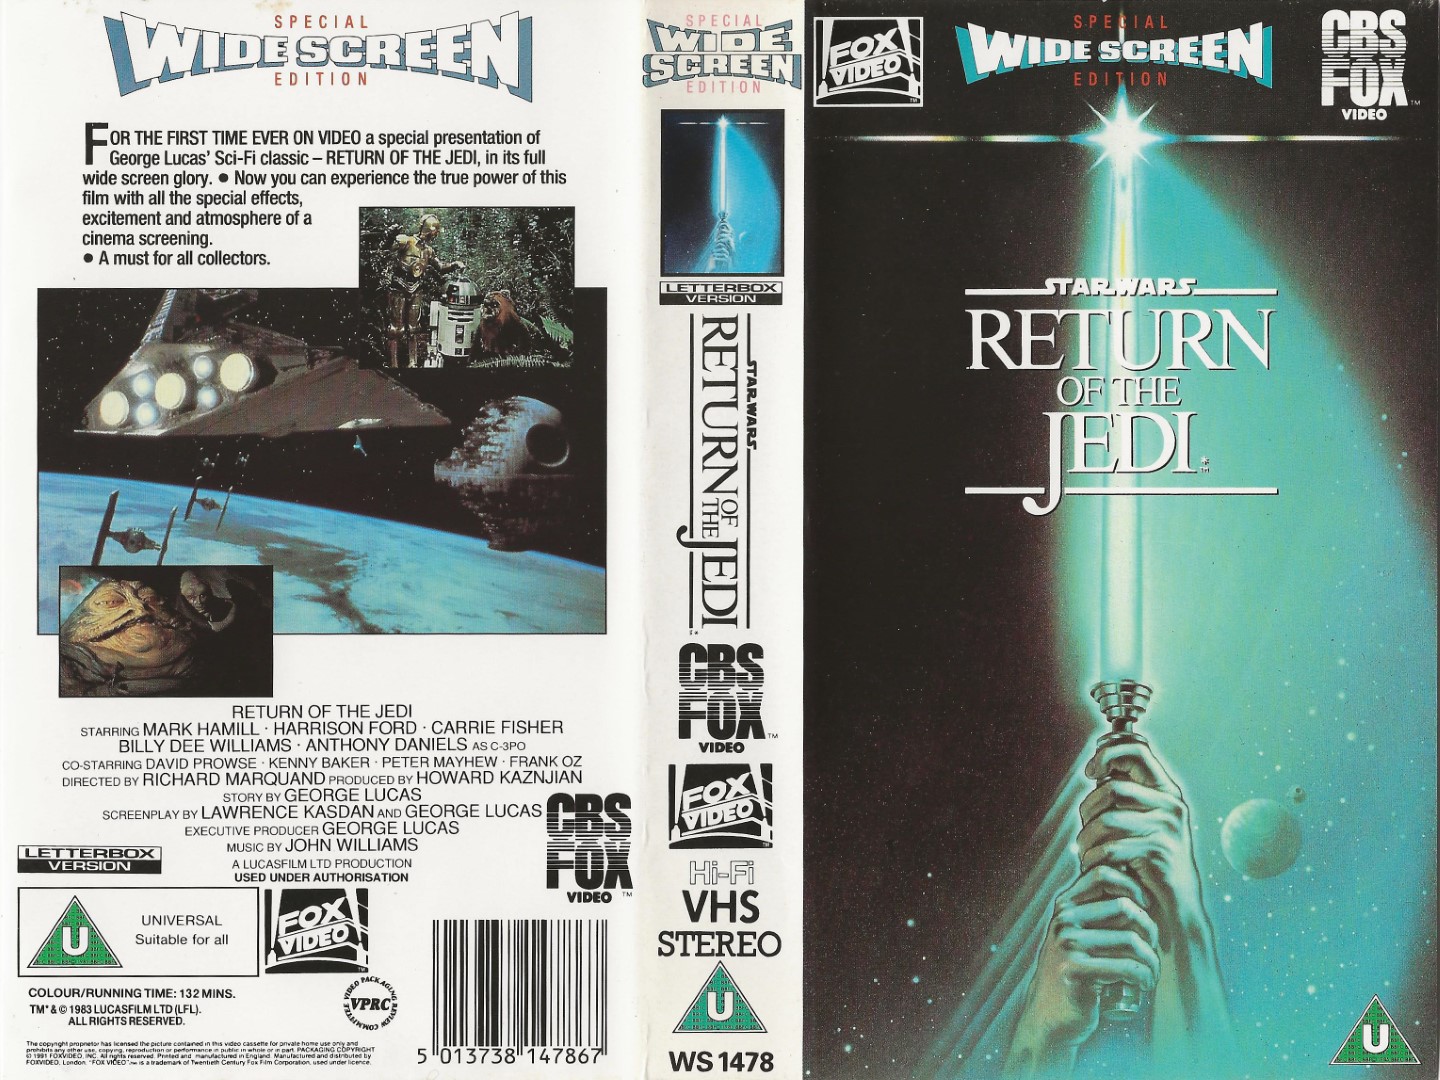 Star Wars: Episode VI - Return of the Jedi  VHS FOX Video 1991